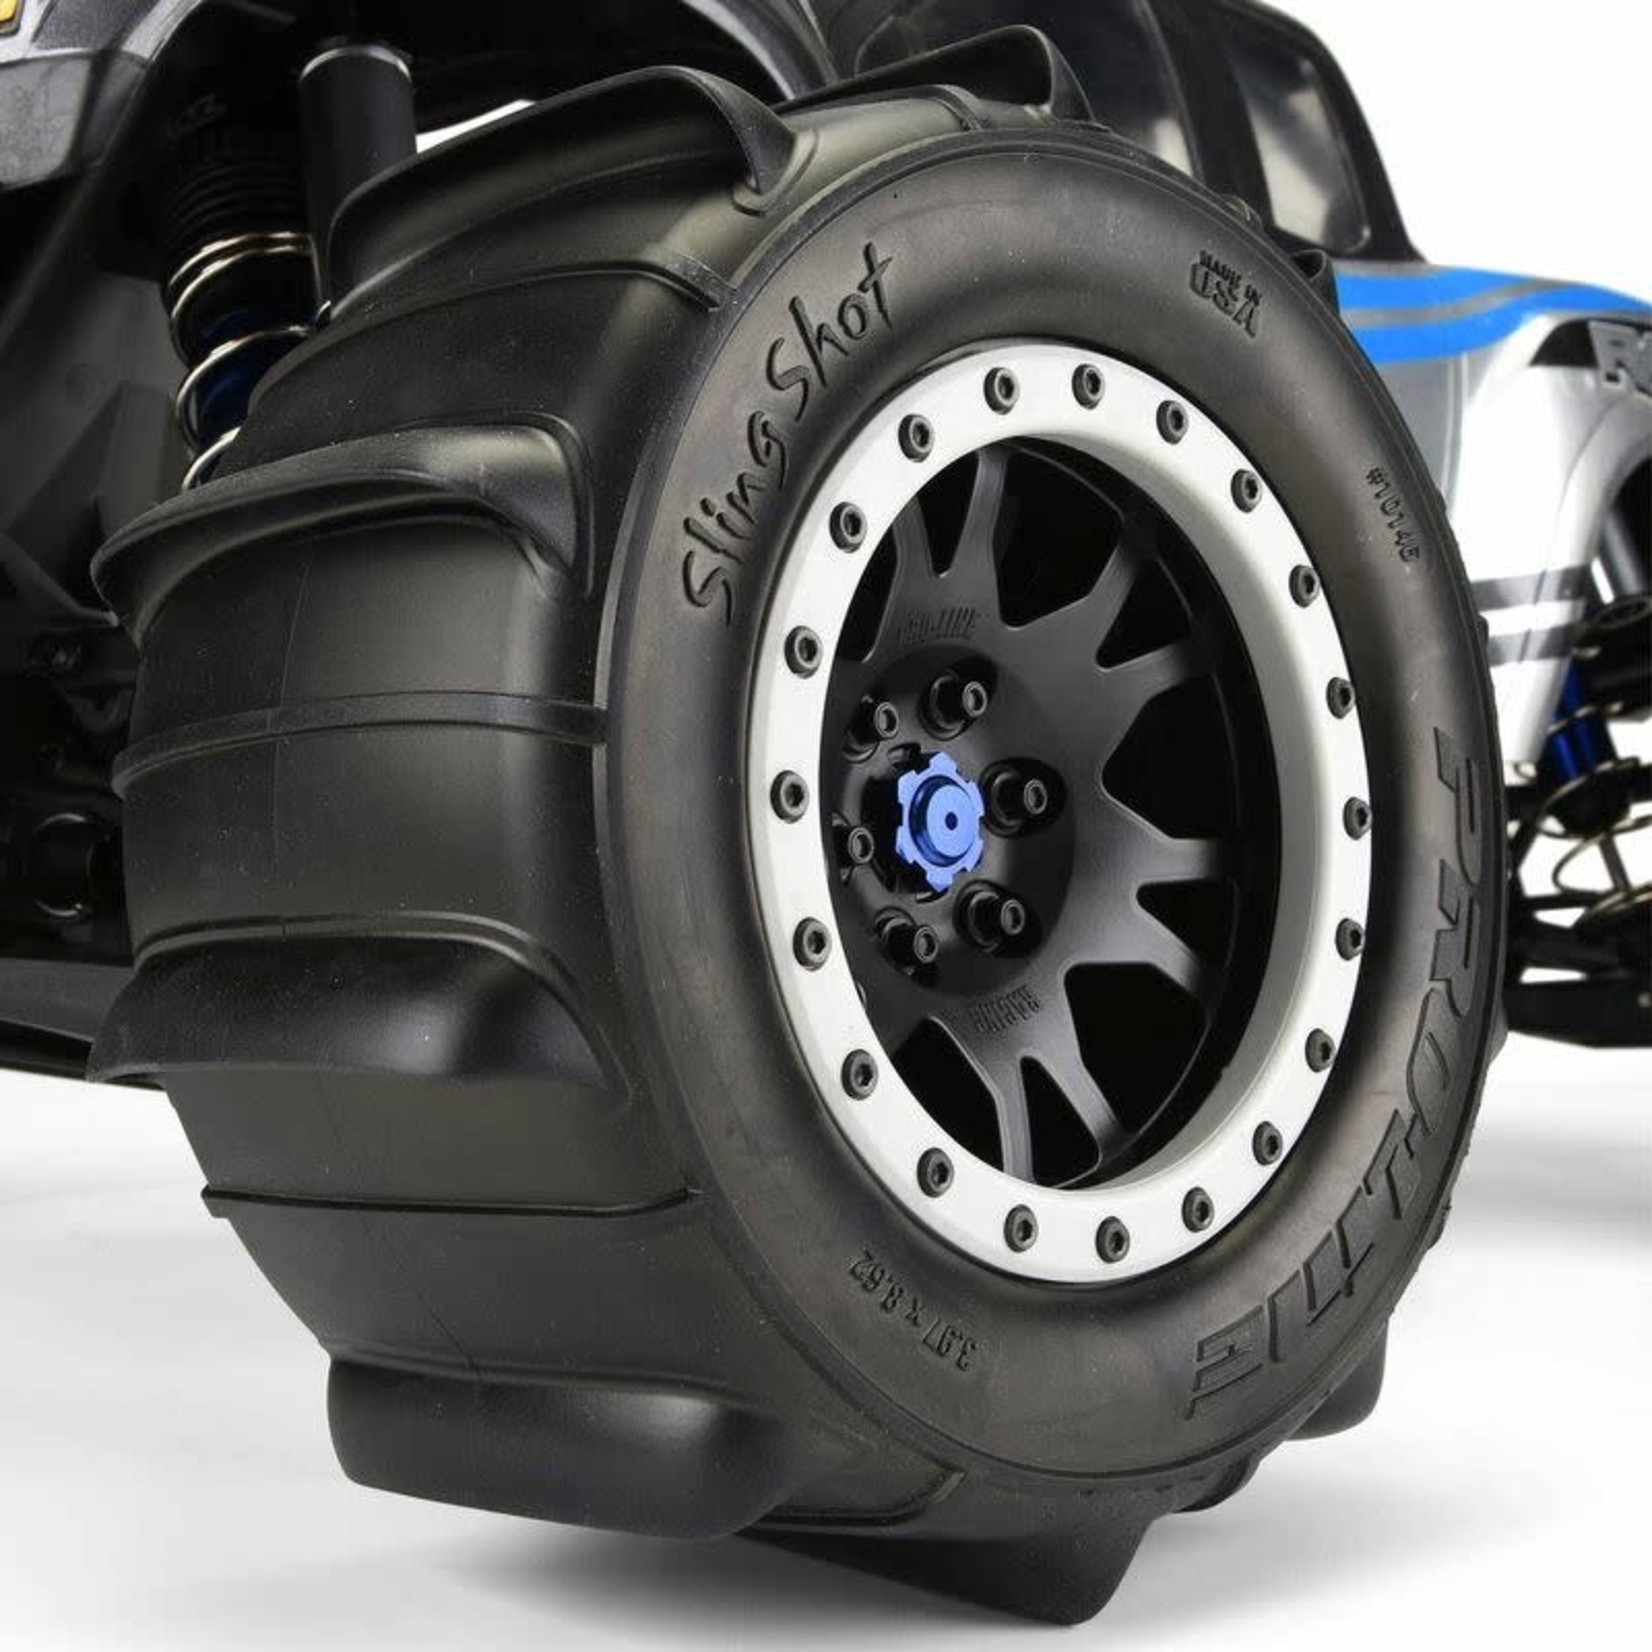 Pro-Line Pro-Line X-Maxx Sling Shot Pre-Mounted Sand Tires w/Impulse Pro-Loc Wheels (MX43) (Black) (2) #10146-13